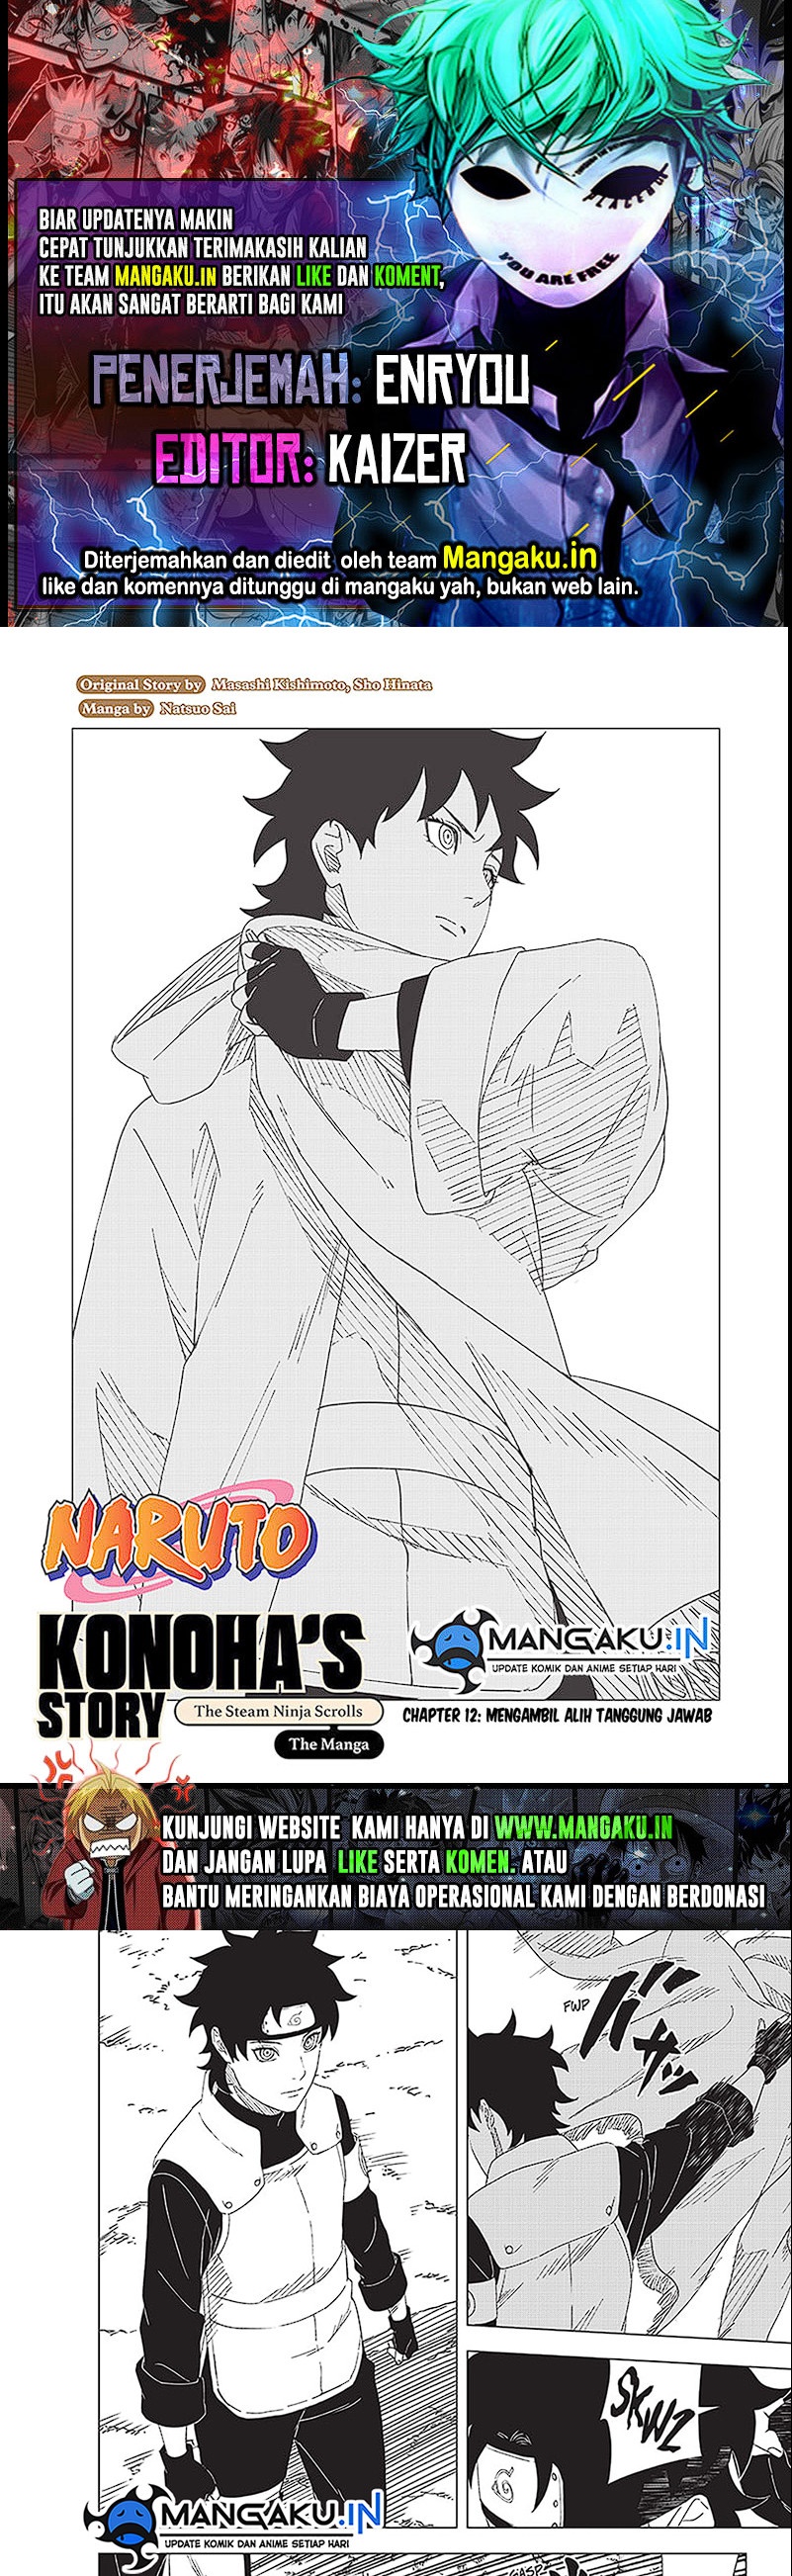 Naruto: Konoha’s Story—The Steam Ninja Scrolls Chapter 12